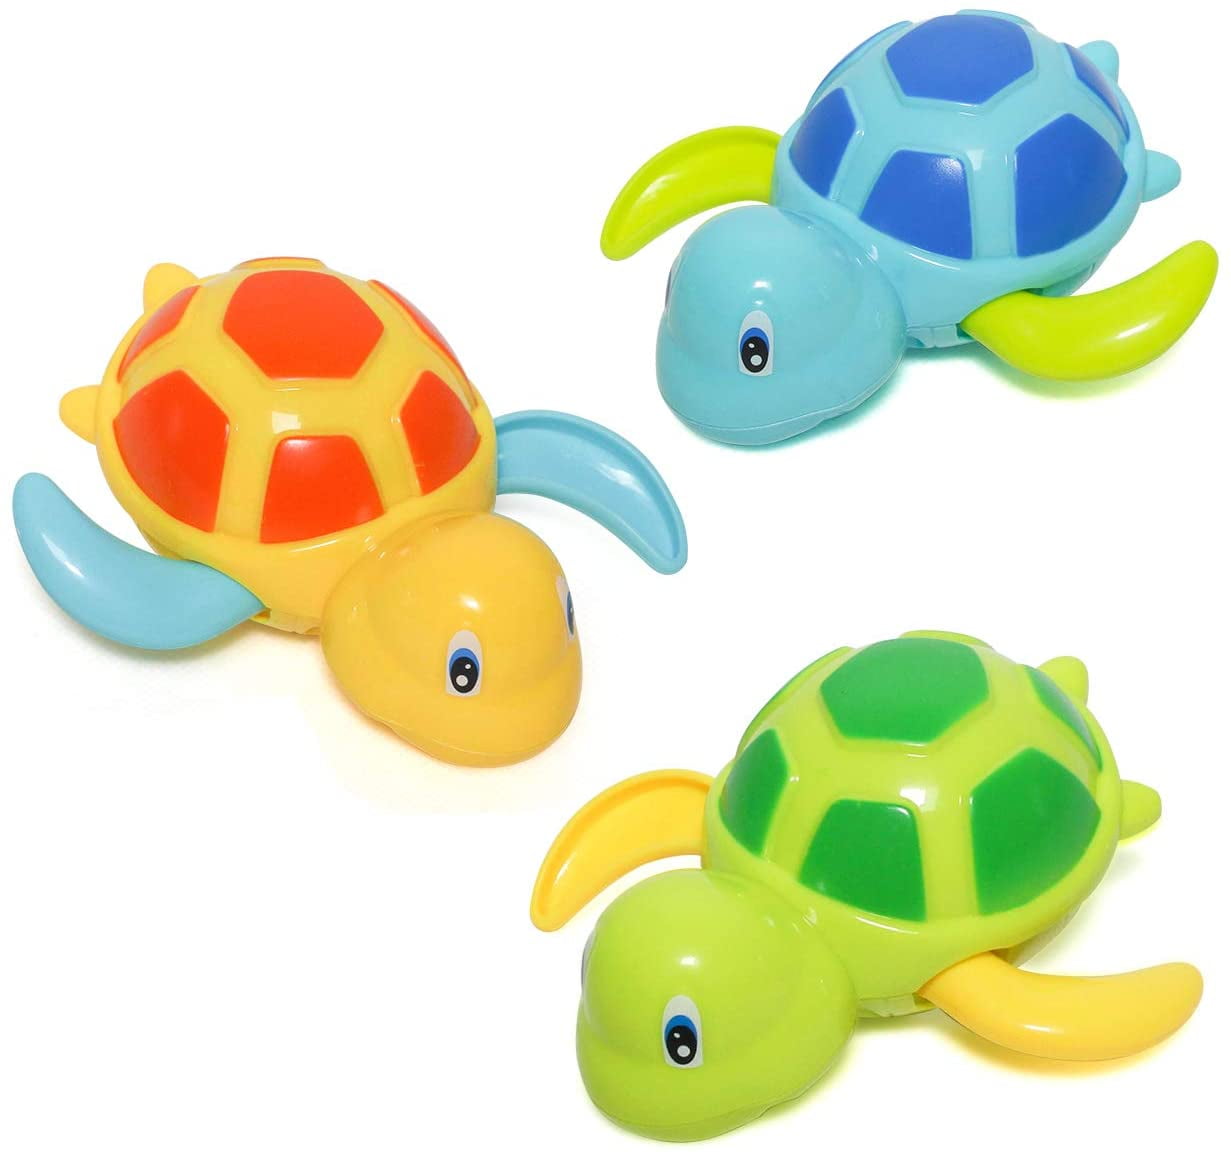 Fridja Baby Bath Swimming Bath Pool Toy Cute Wind Up Turtle Animal Bath Toys, Size: Small, Blue